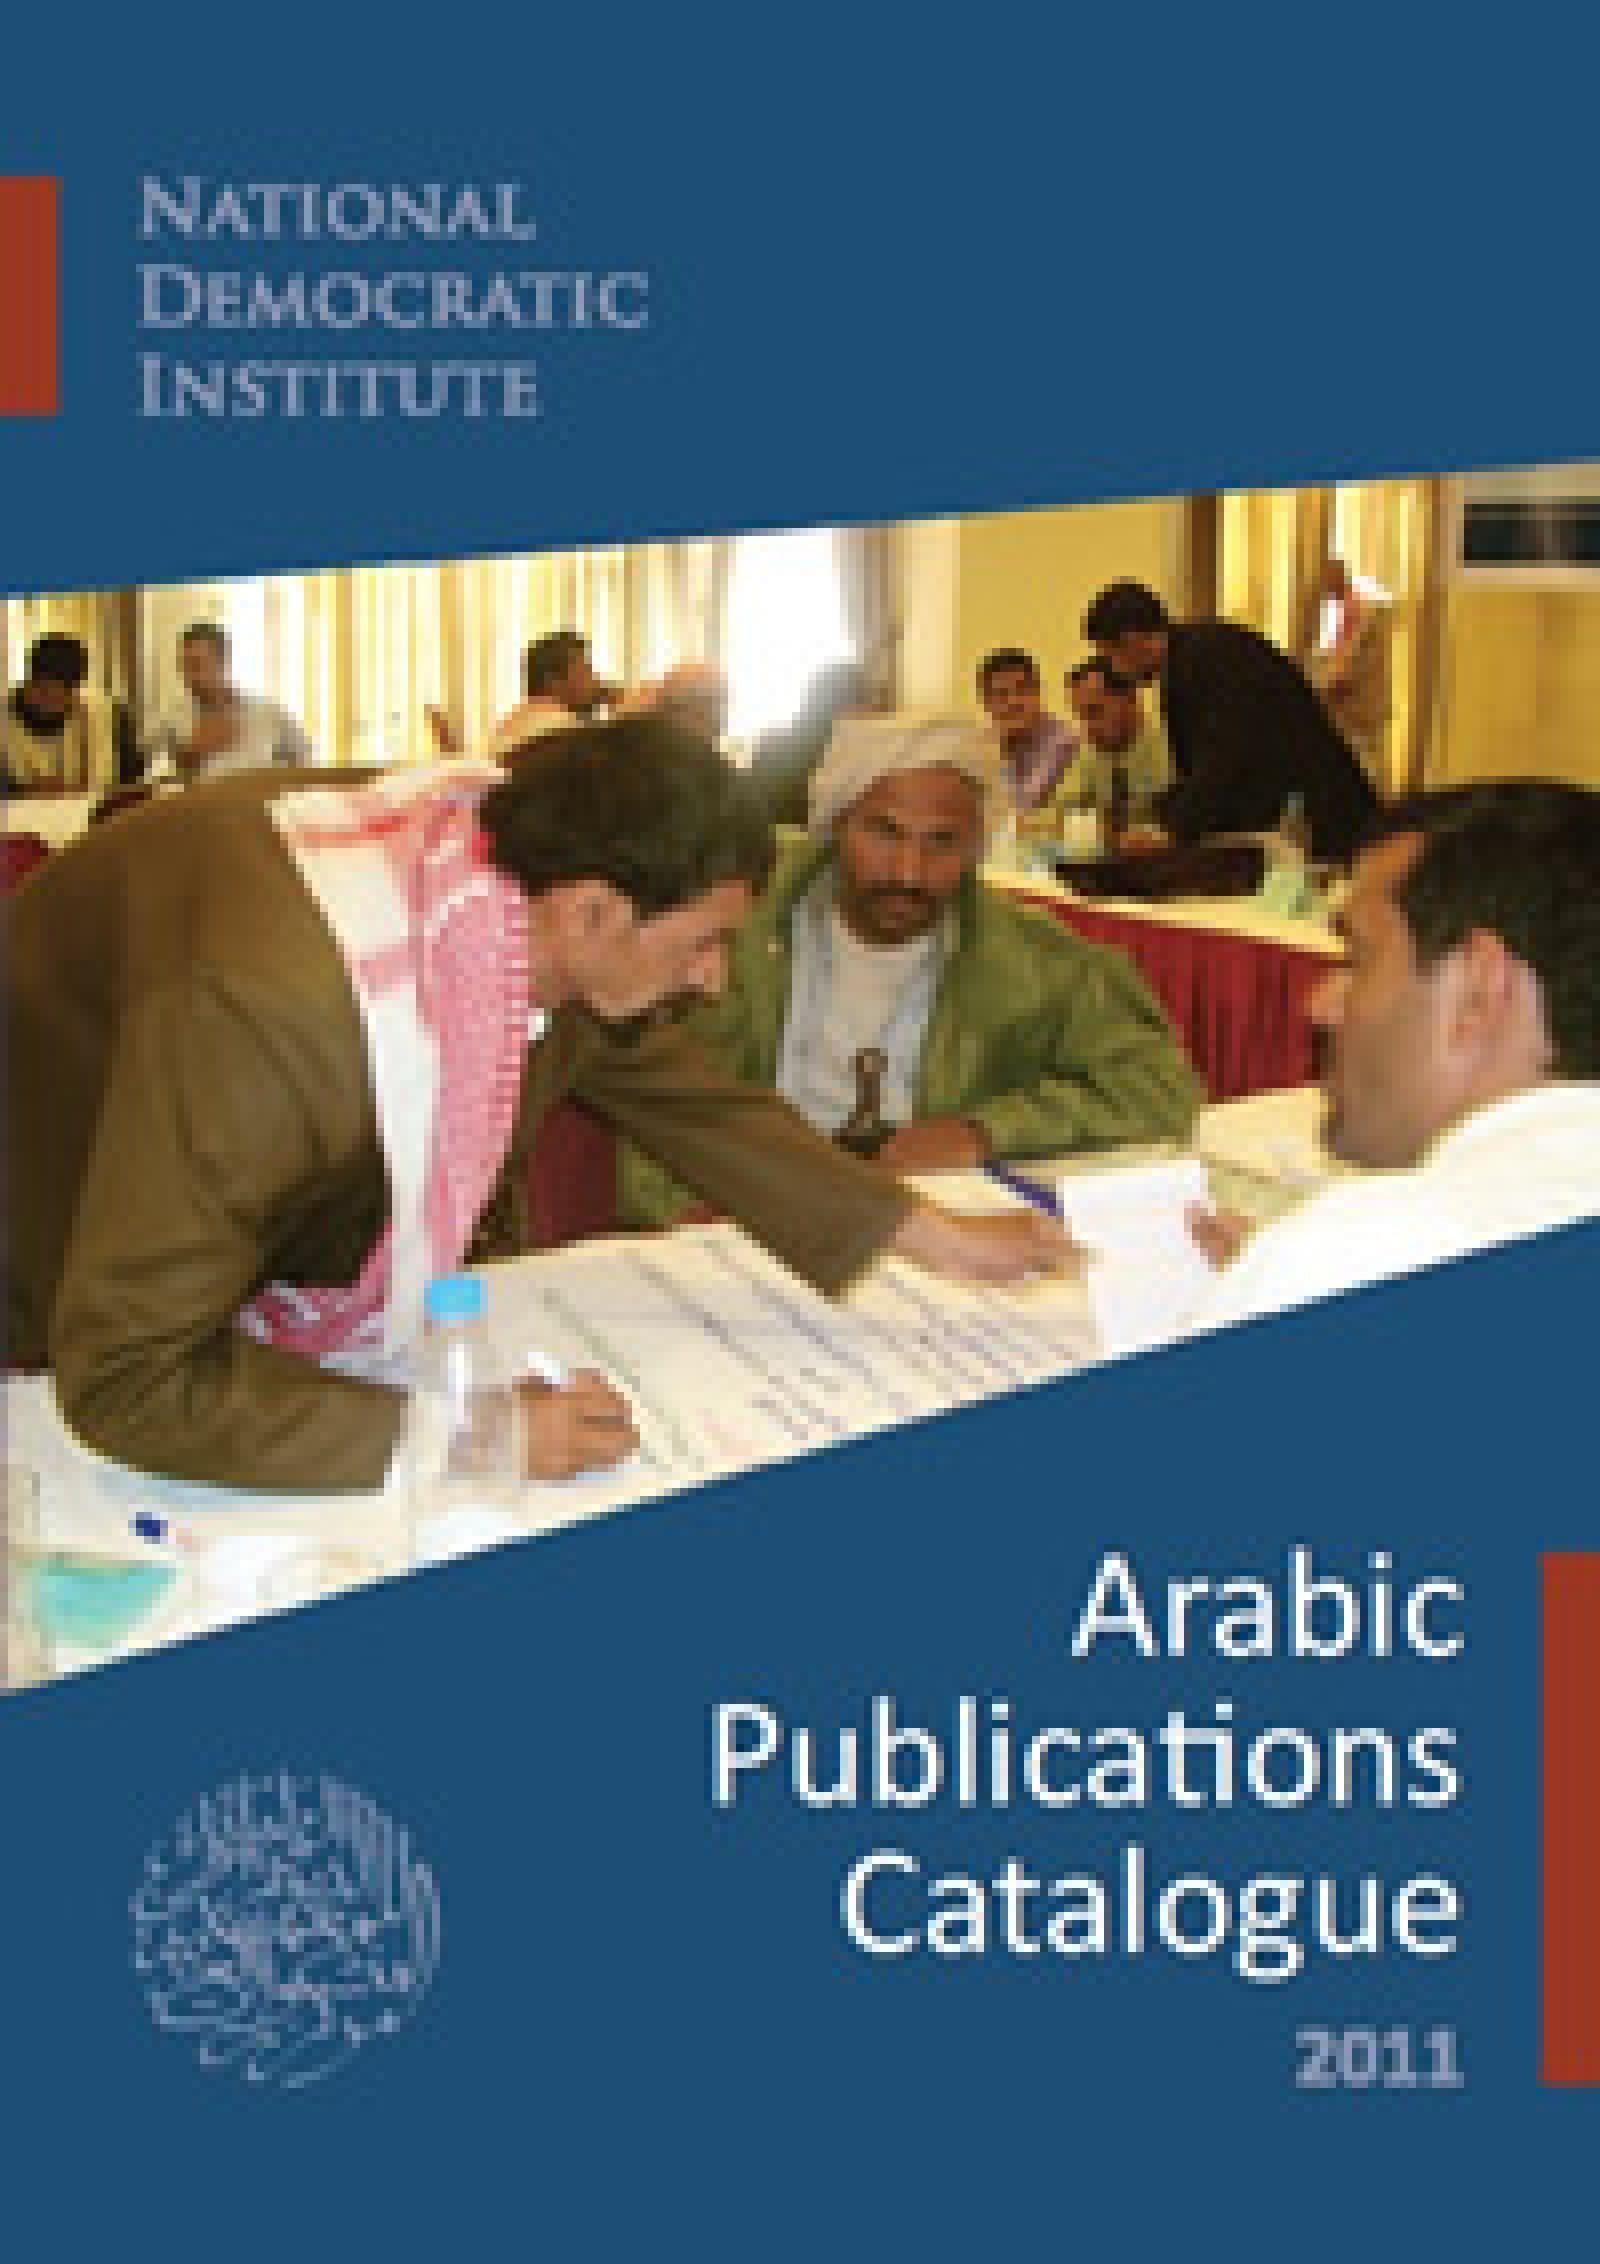 Publications in Arabic